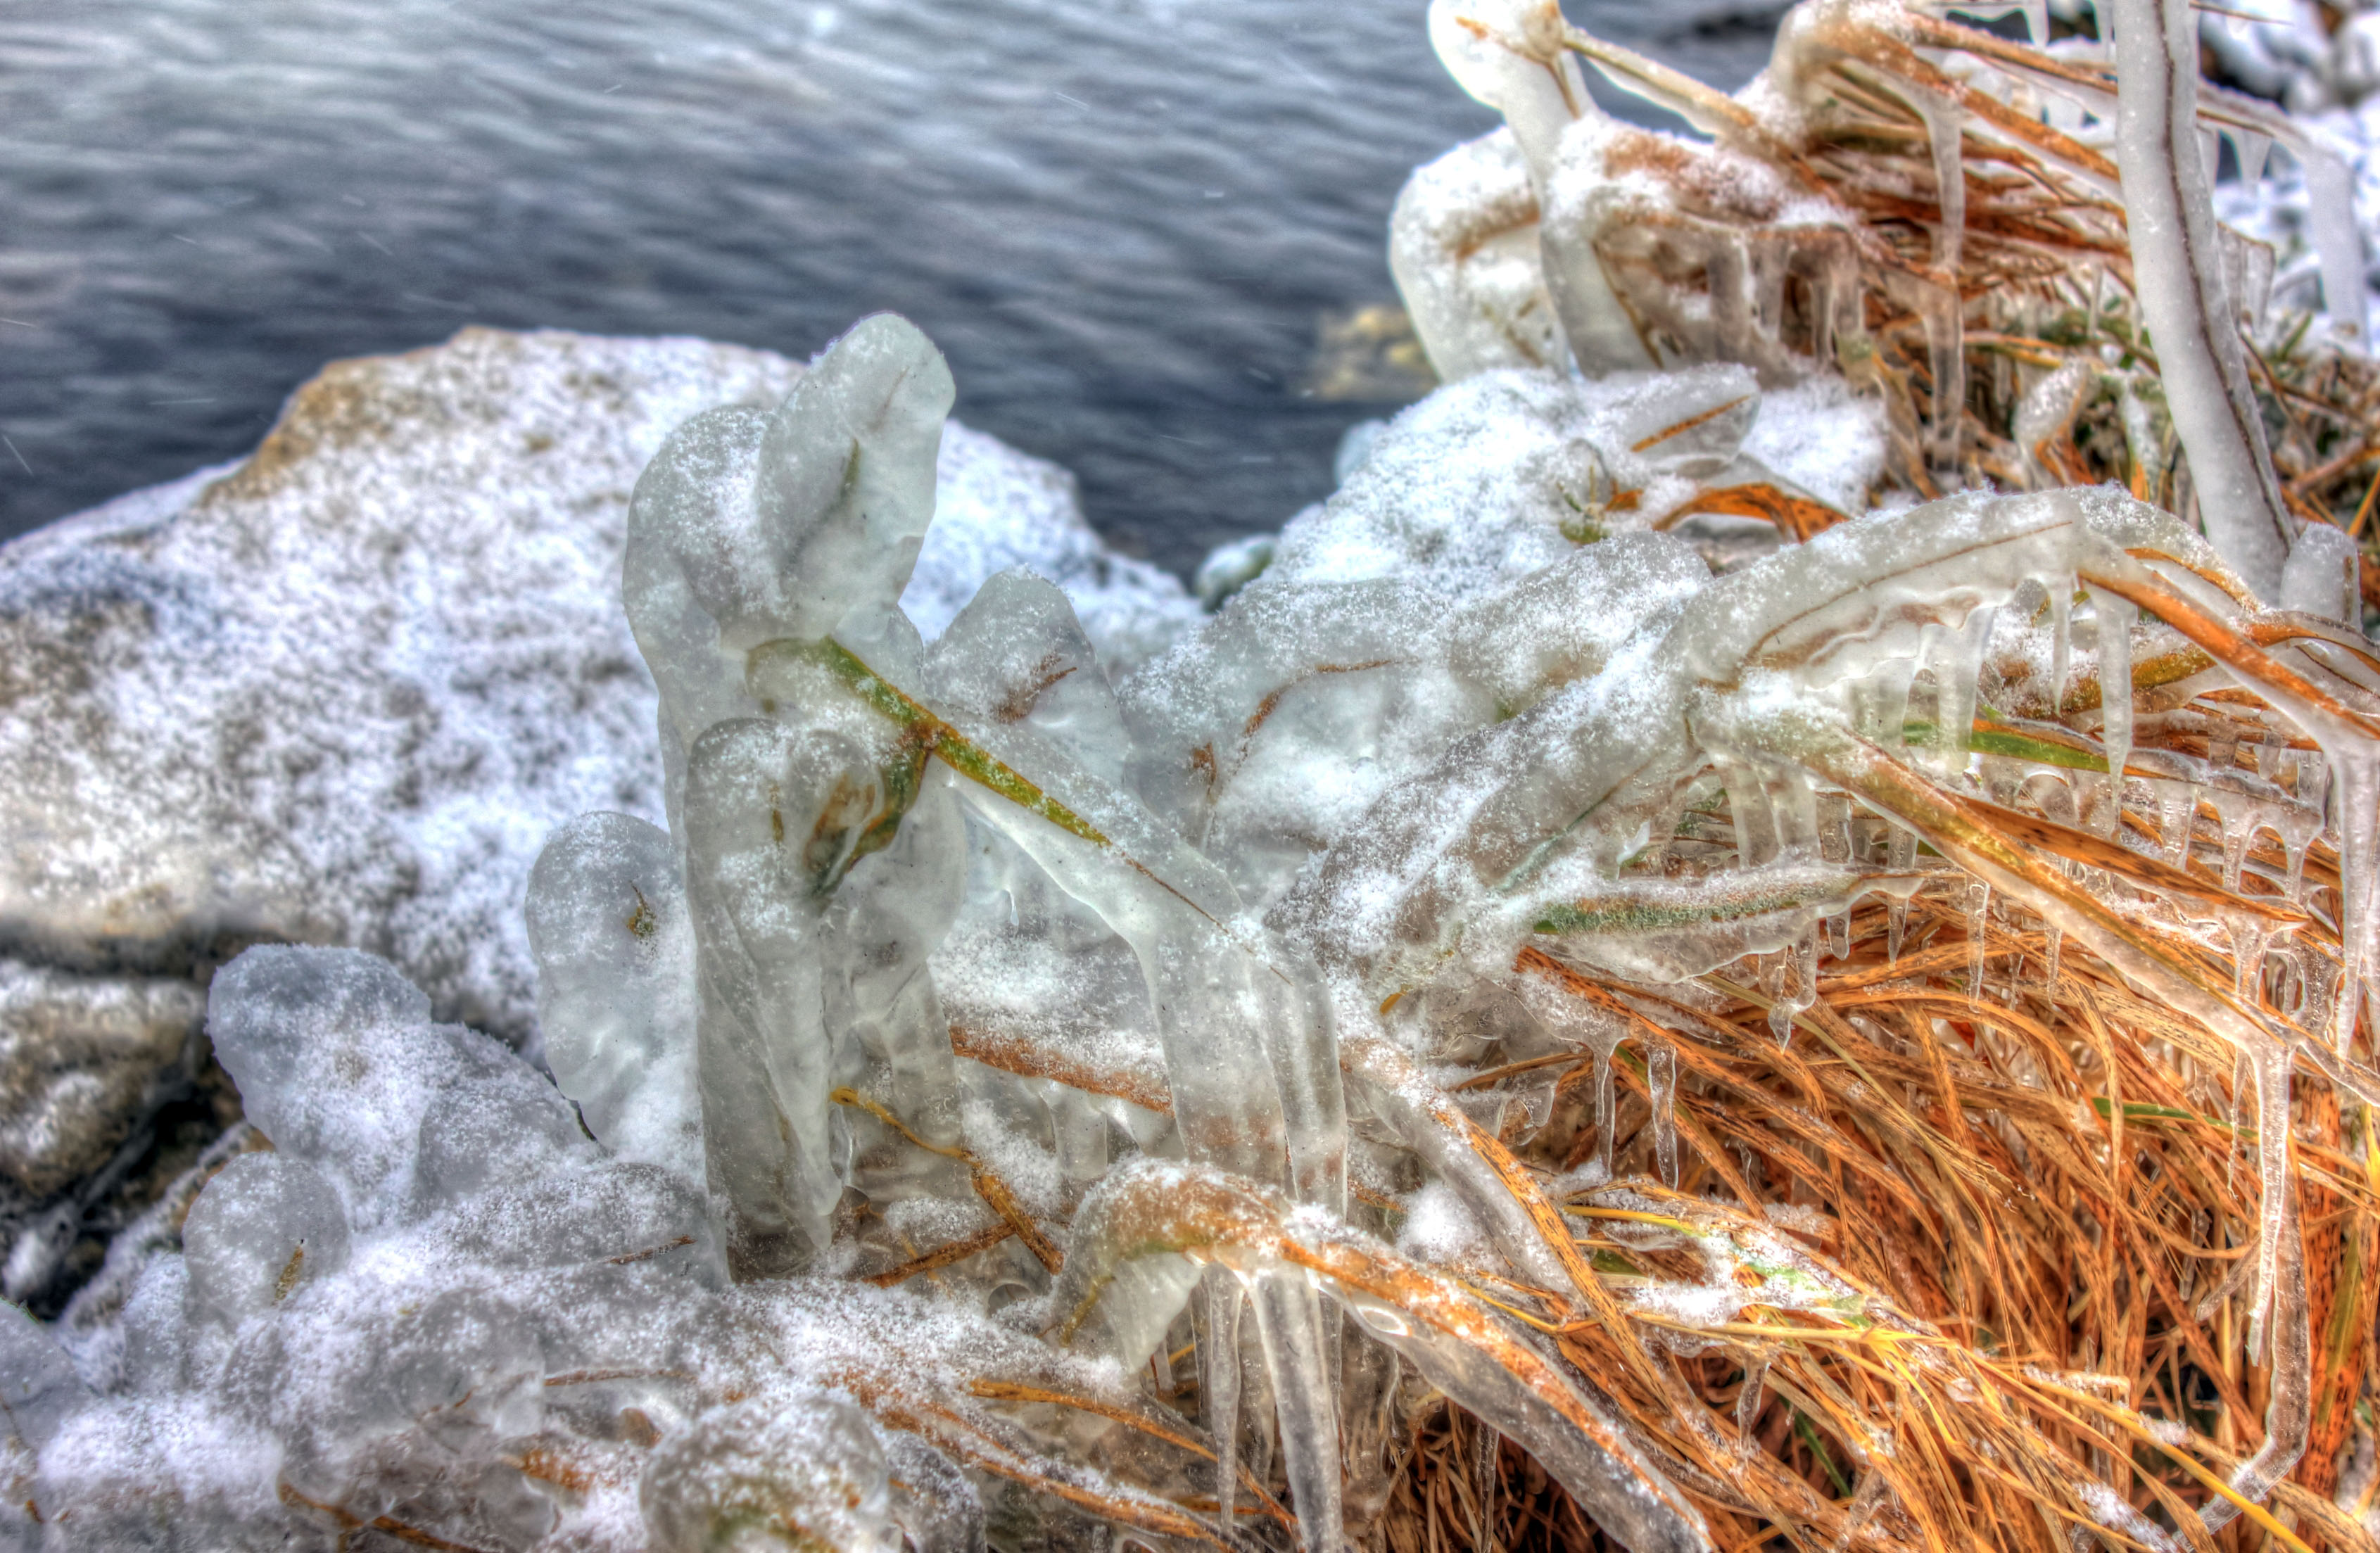 File:Gfp-illinois-shabbona-lake-state-park-iced-plants.jpg ...